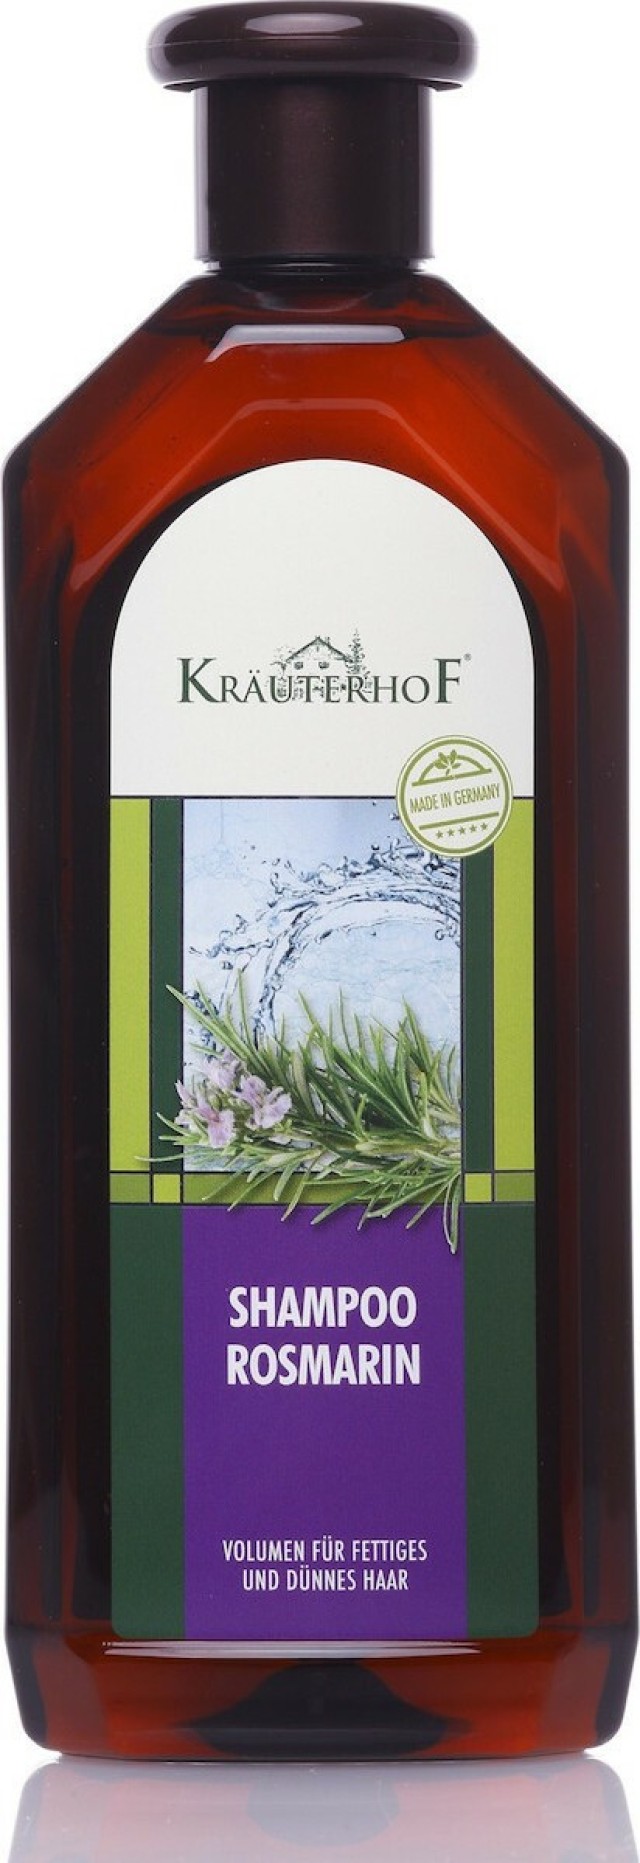 Krauterhof Shampoo Rosmarin- Σαμπουάν καθημερινής χρήσης για έξτρα όγκο με εκχύλισμα δενδρολίβανου, 500ml